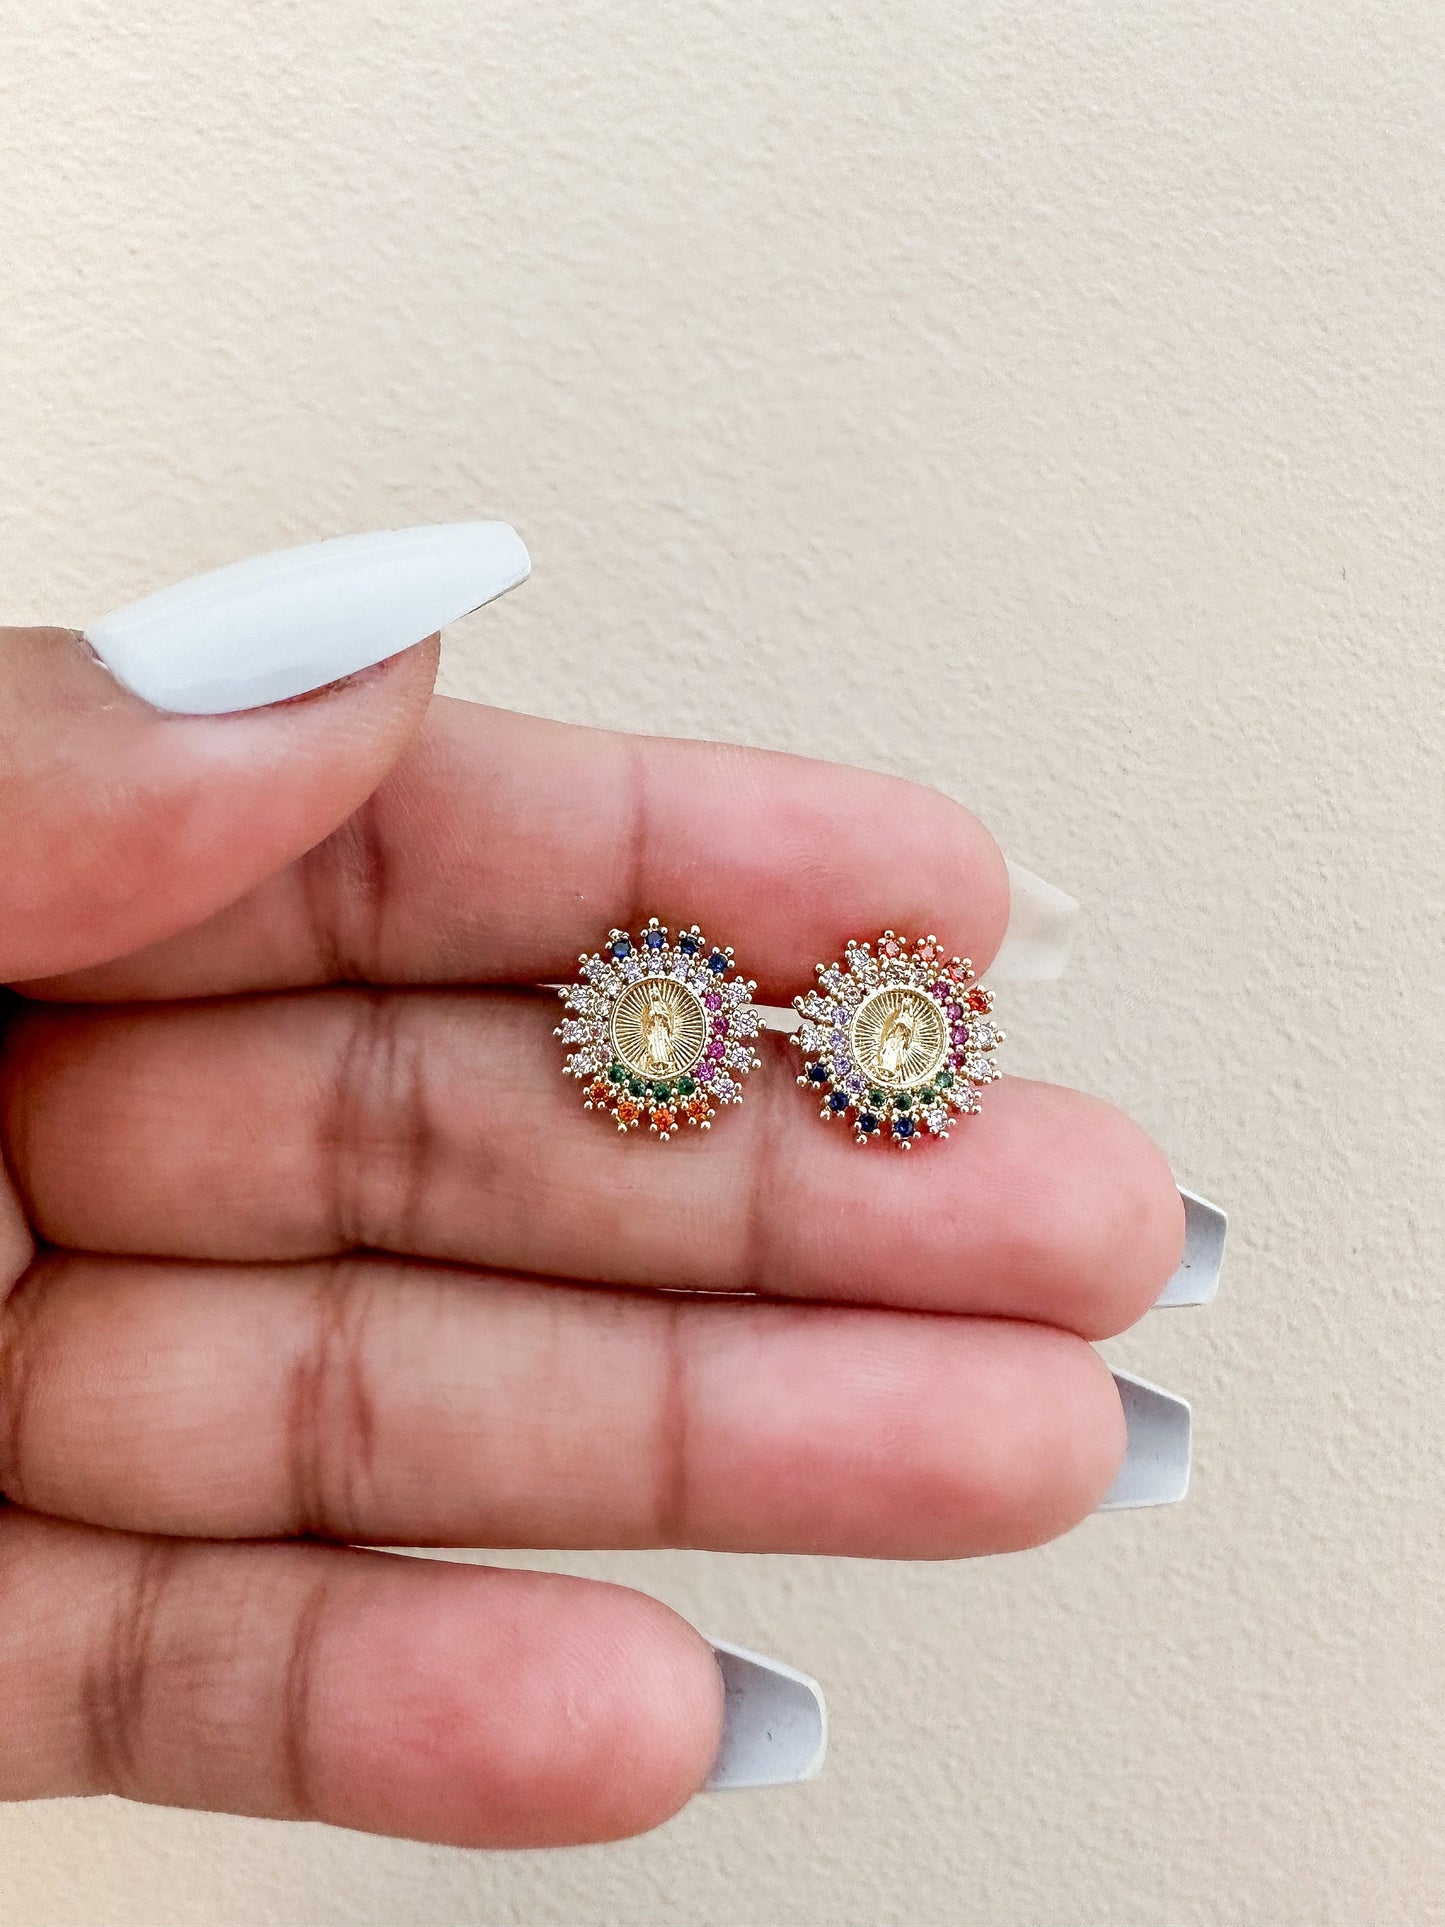 Small colorful Virgin Mary sun Earrings. Virgin Mary gold plated earrings,virgin Mary earrings